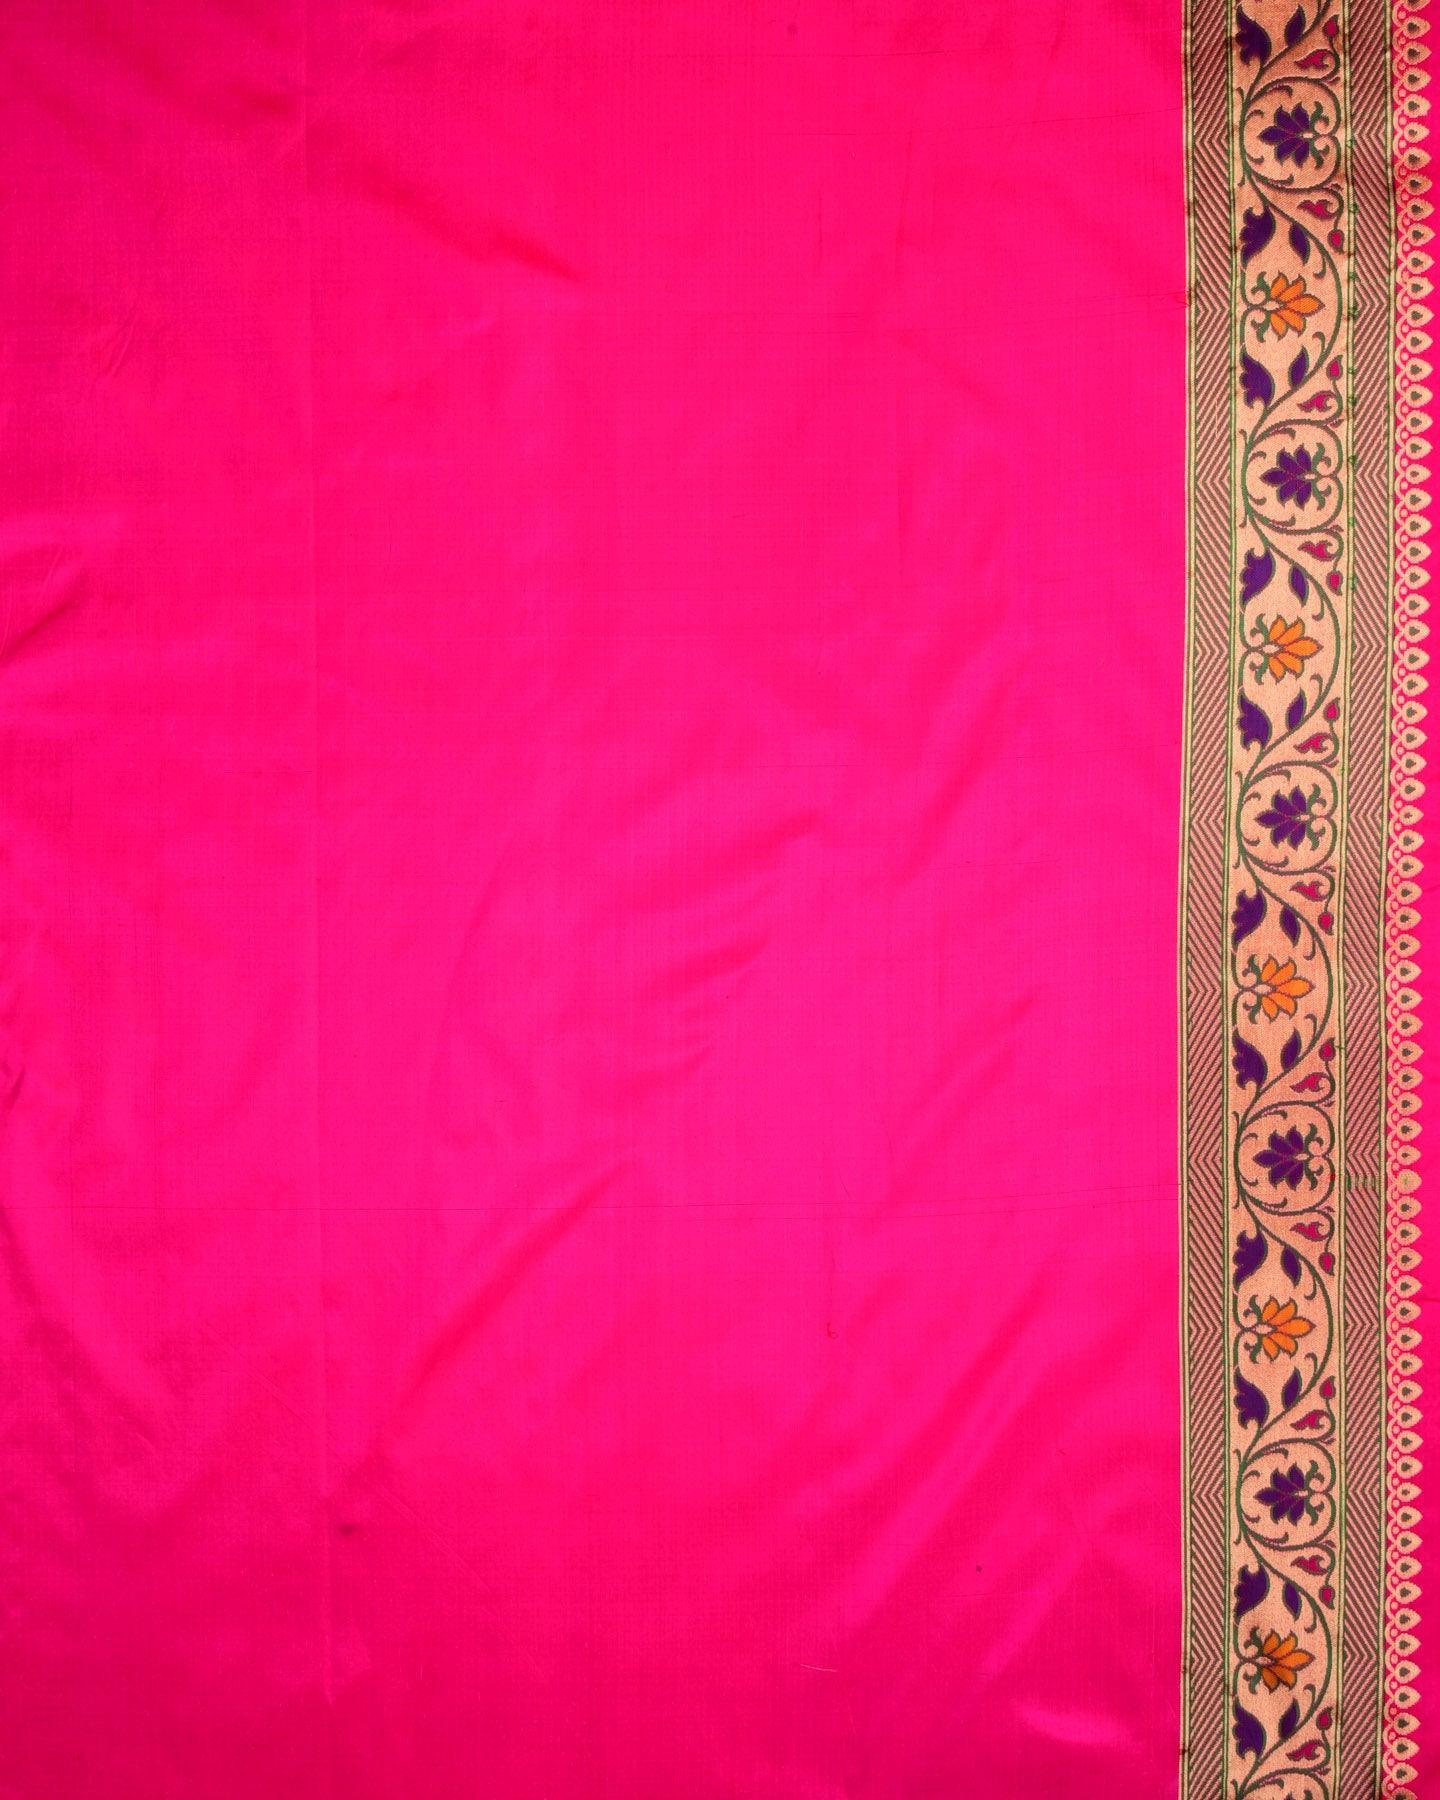 Rani Pink Banarasi Patola Chauhara Meena Cutwork Brocade Handwoven Katan Silk Saree - By HolyWeaves, Benares